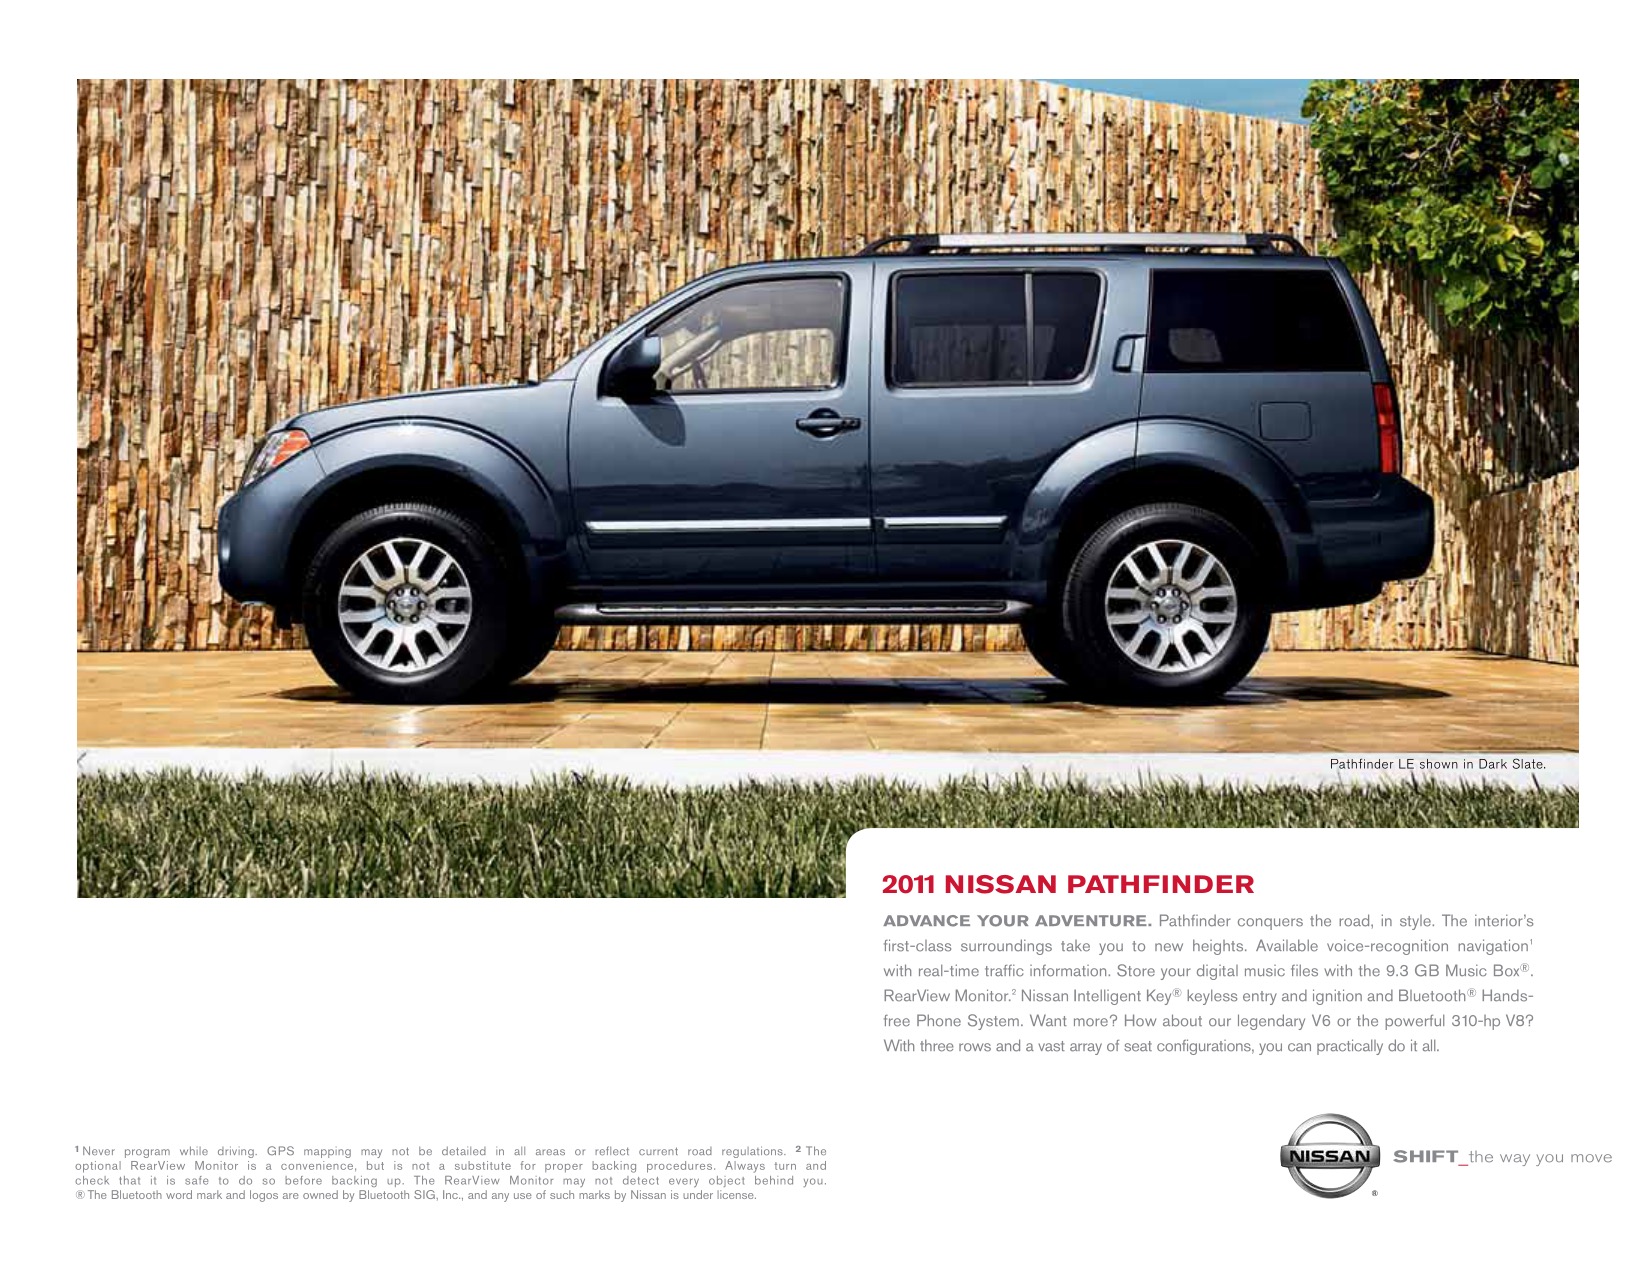 2011 Nissan Pathfinder Brochure